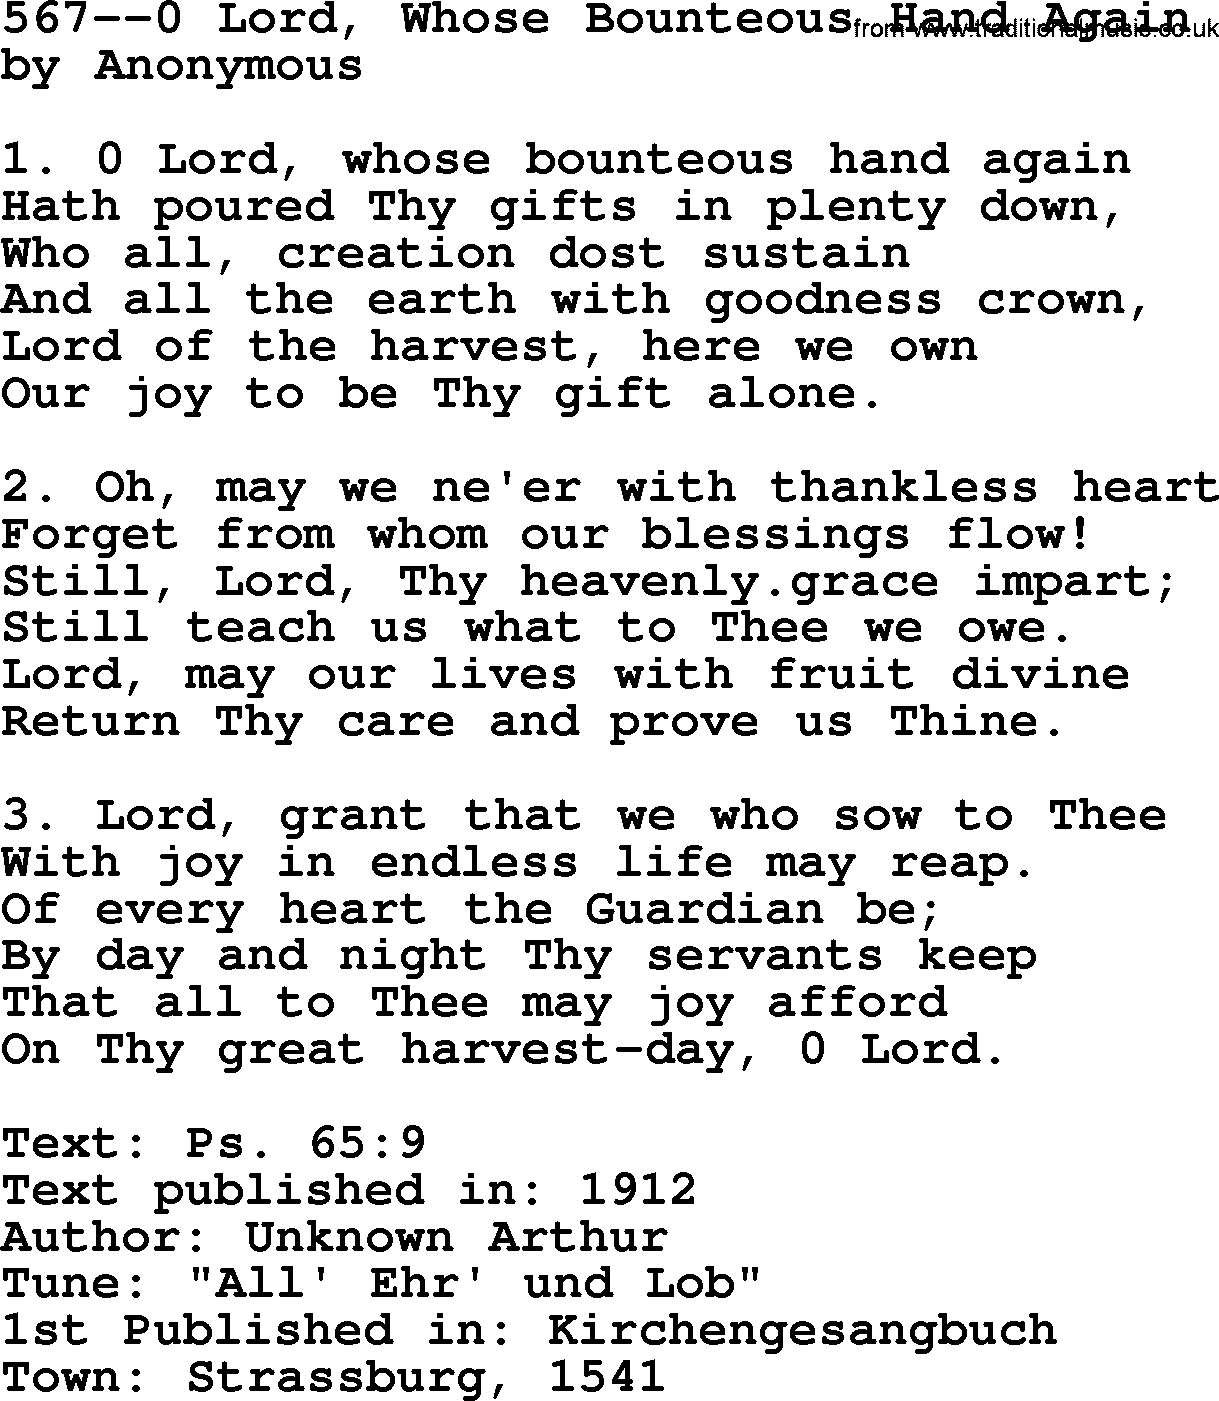 Lutheran Hymn: 567--0 Lord, Whose Bounteous Hand Again.txt lyrics with PDF